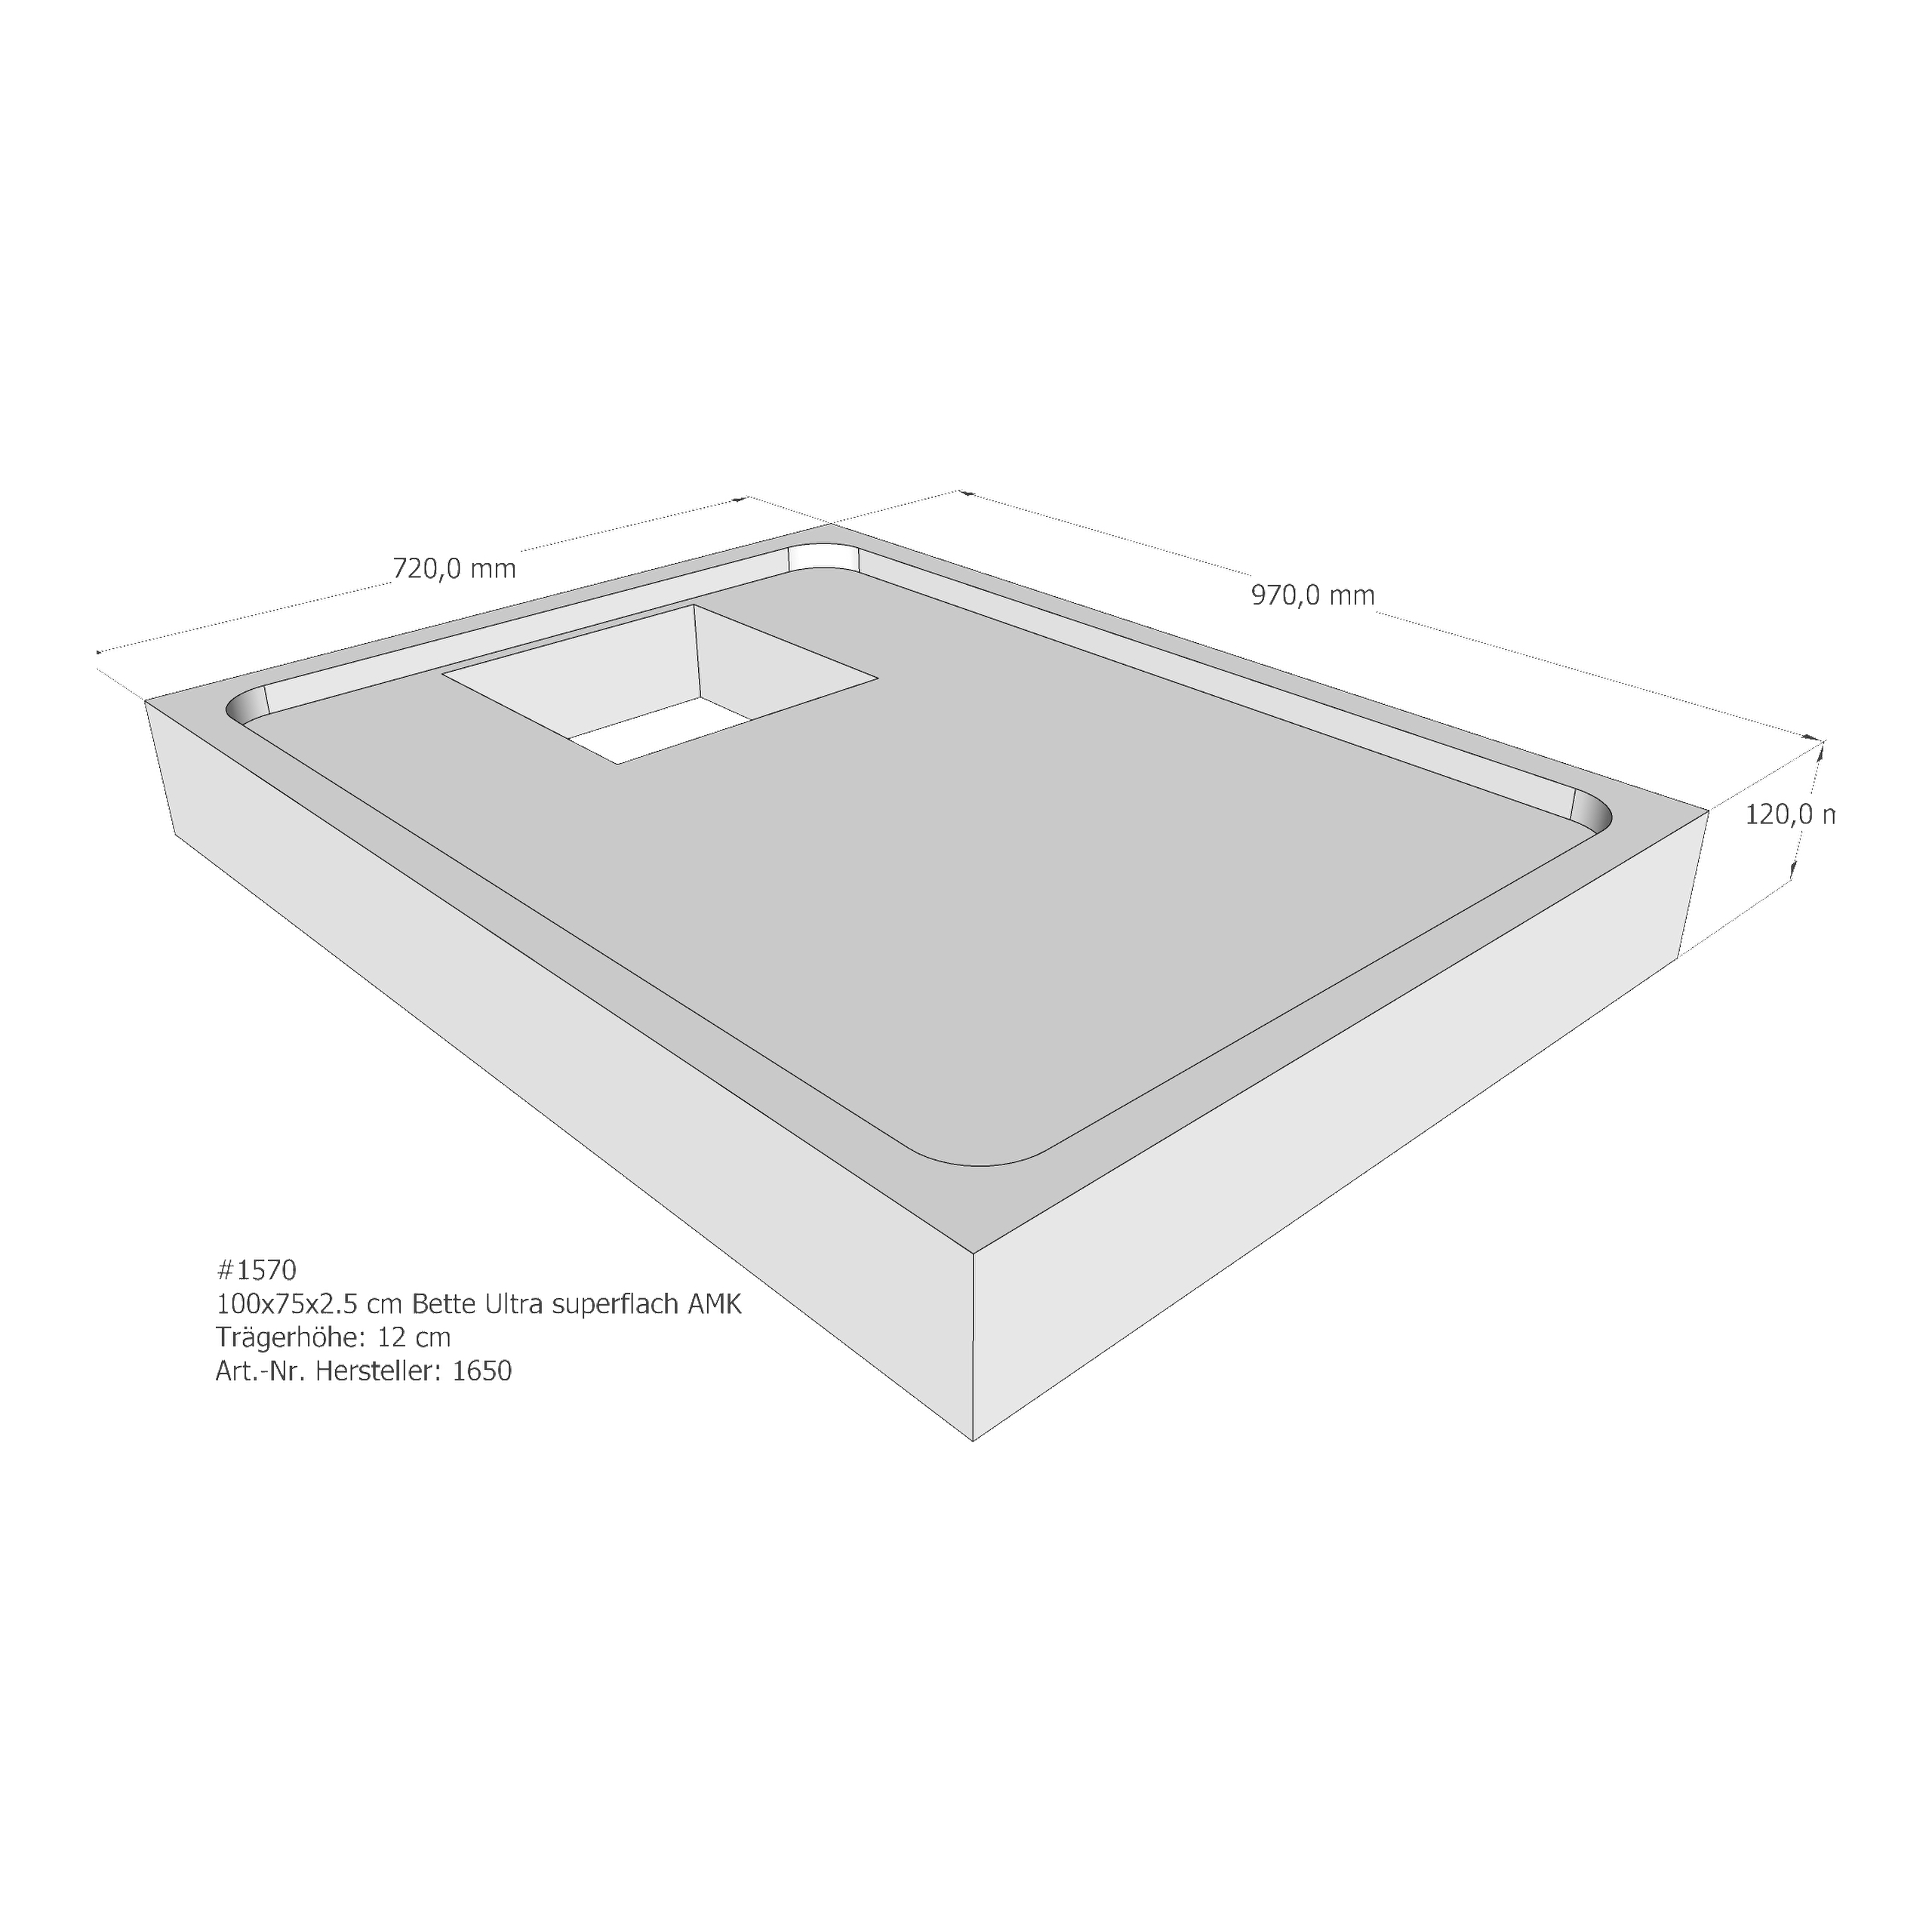 Duschwannenträger für Bette BetteUltra (superflach) 100 × 75 × 2,5 cm